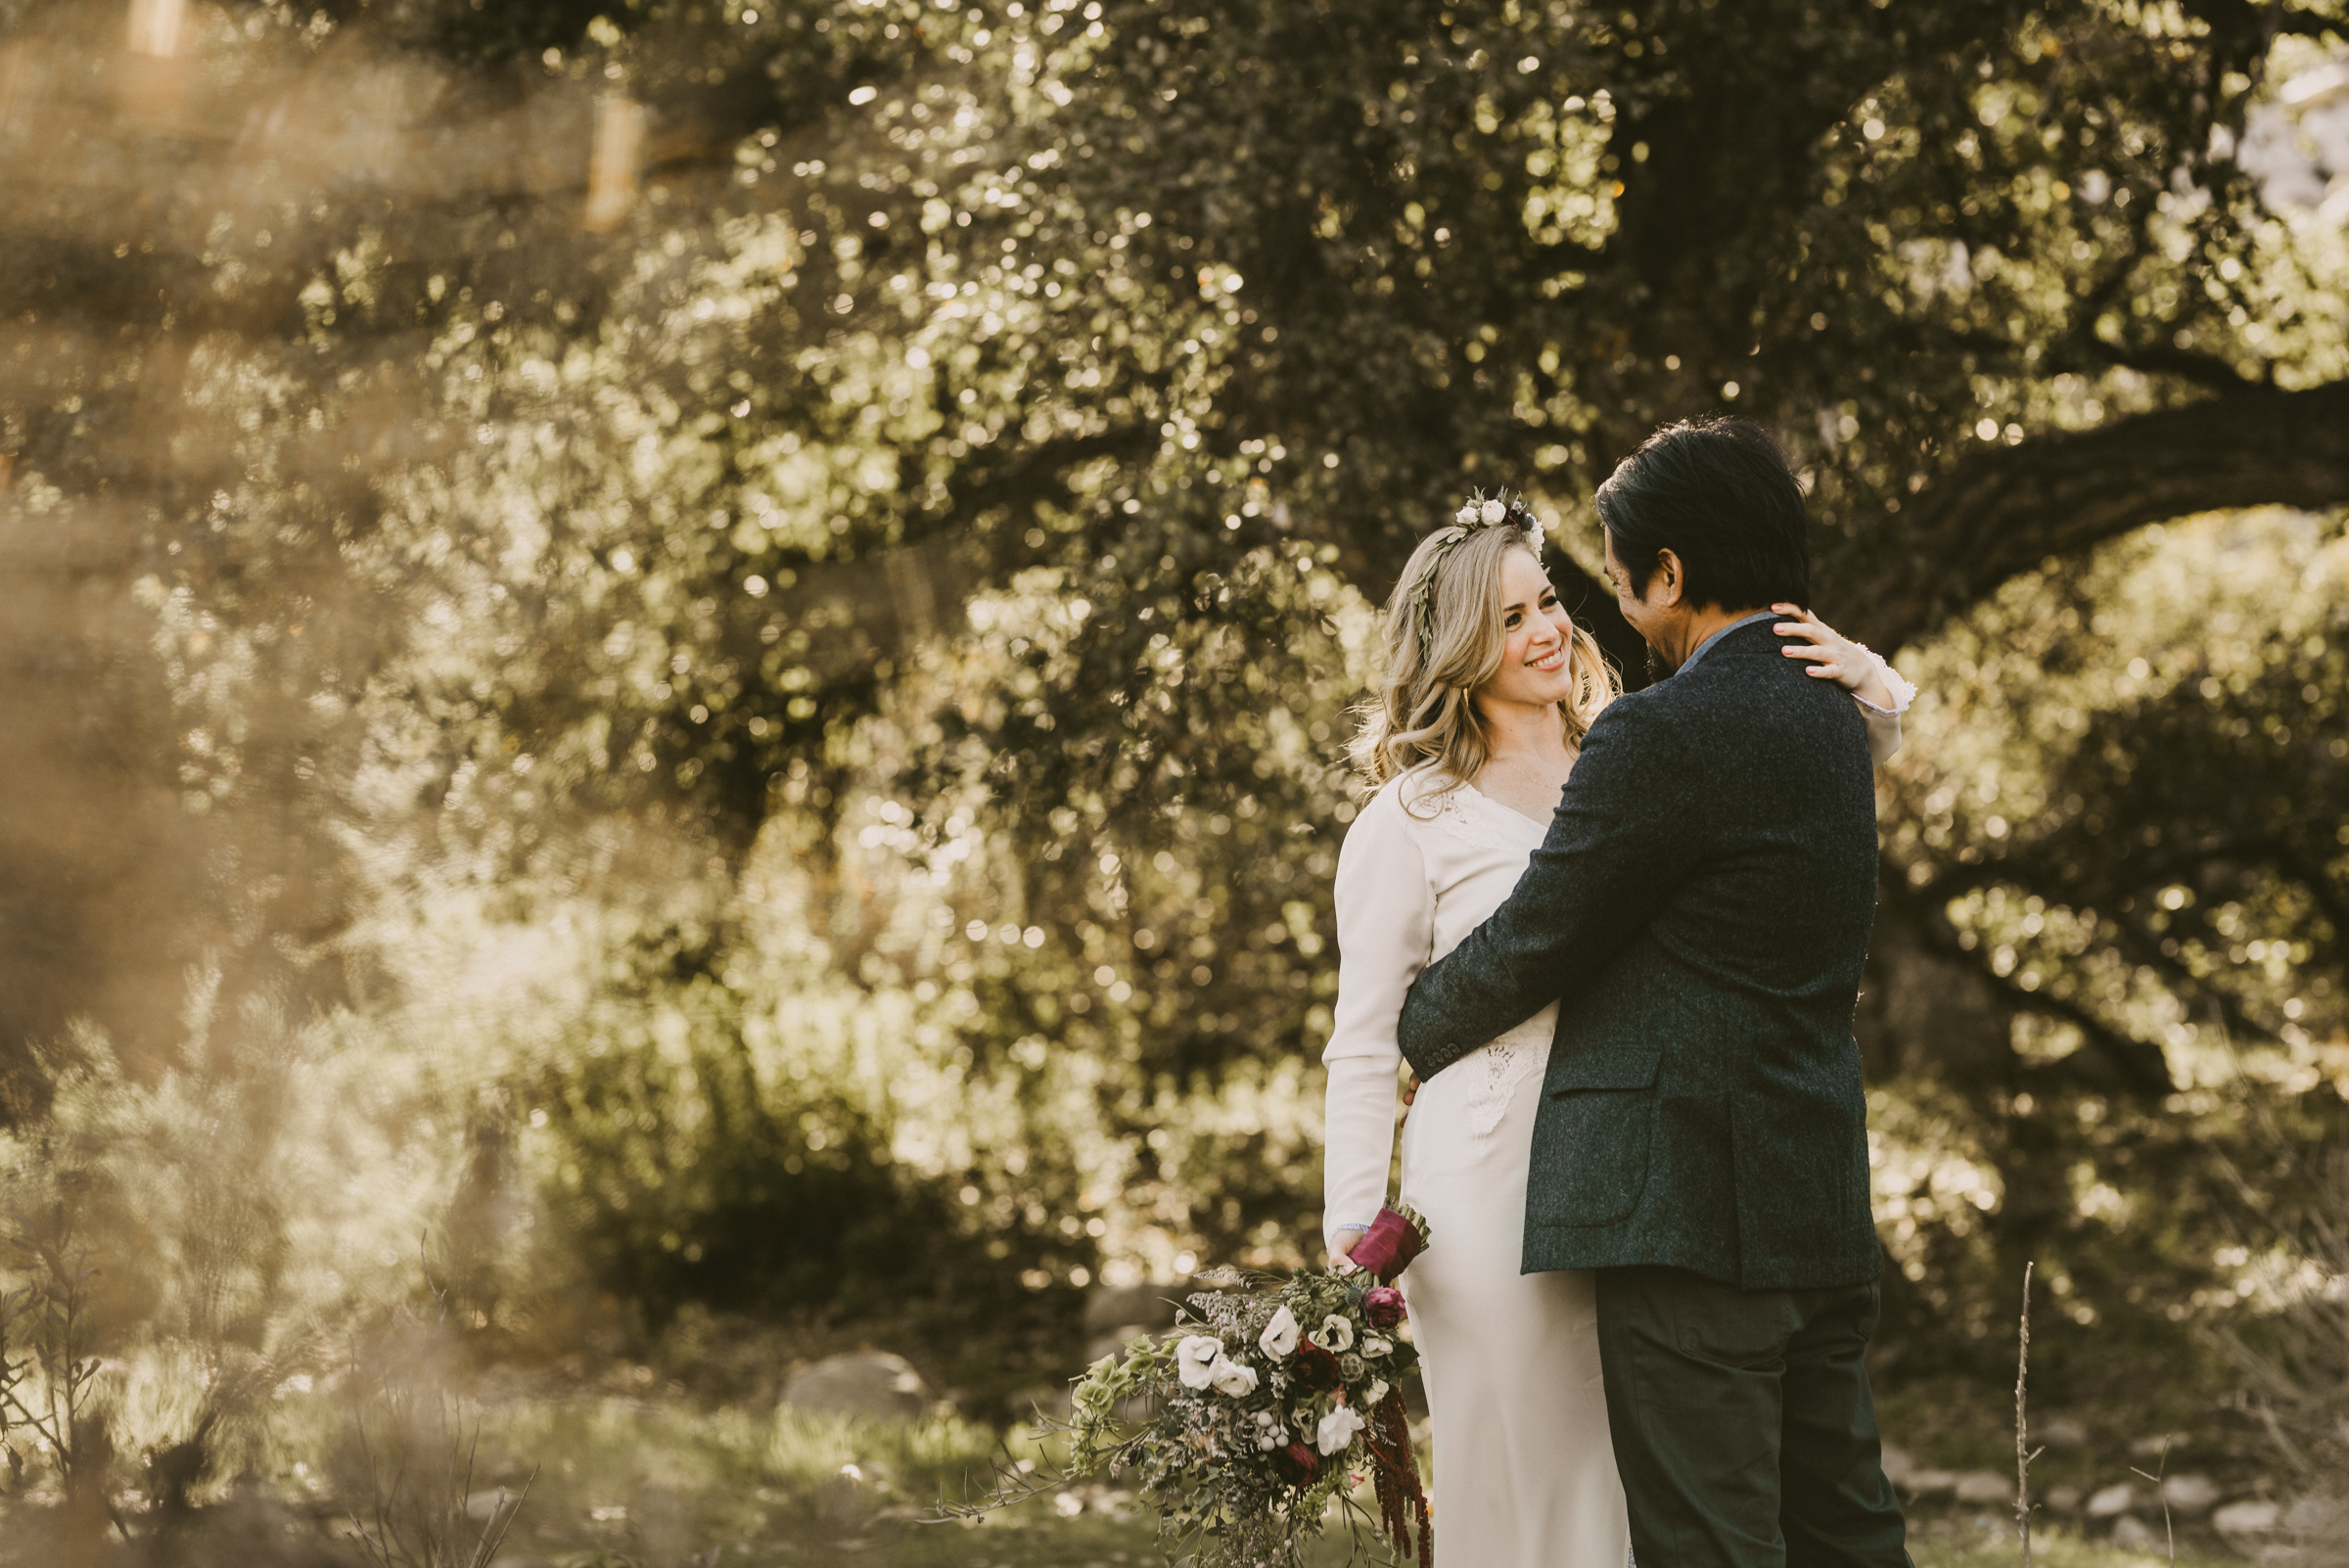 ©Isaiah + Taylor Photography - Intimate Elopement, Eaton Canyon, Los Angeles Wedding Photographer-11.jpg